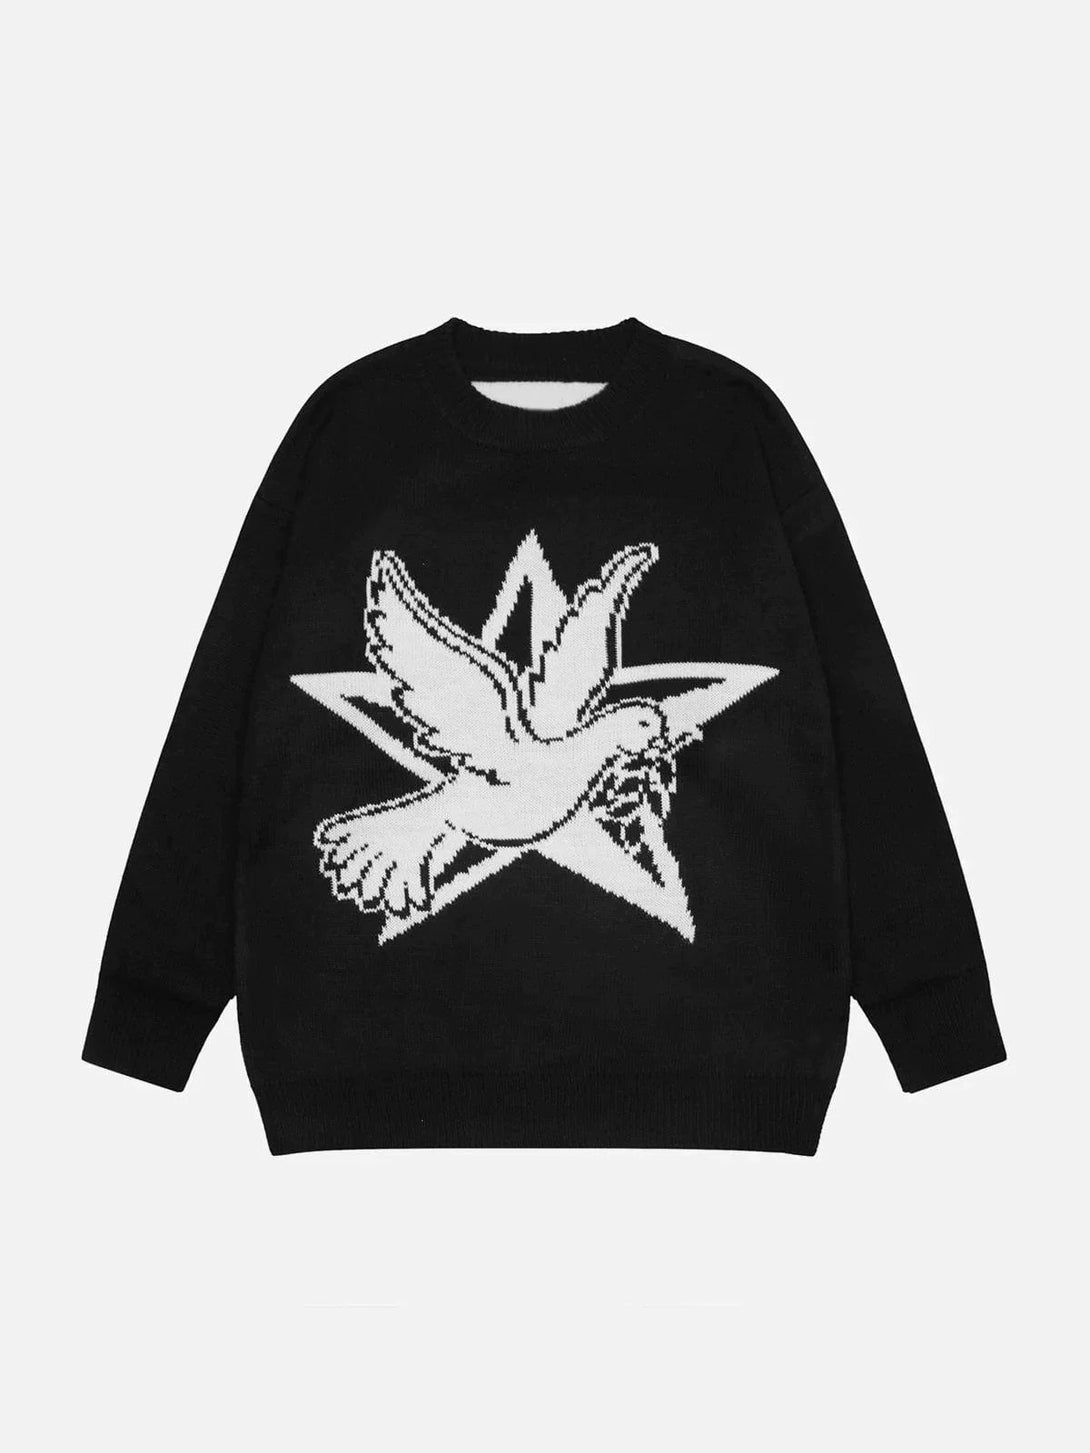 Majesda® - Dove Of Peace Print Sweater outfit ideas streetwear fashion